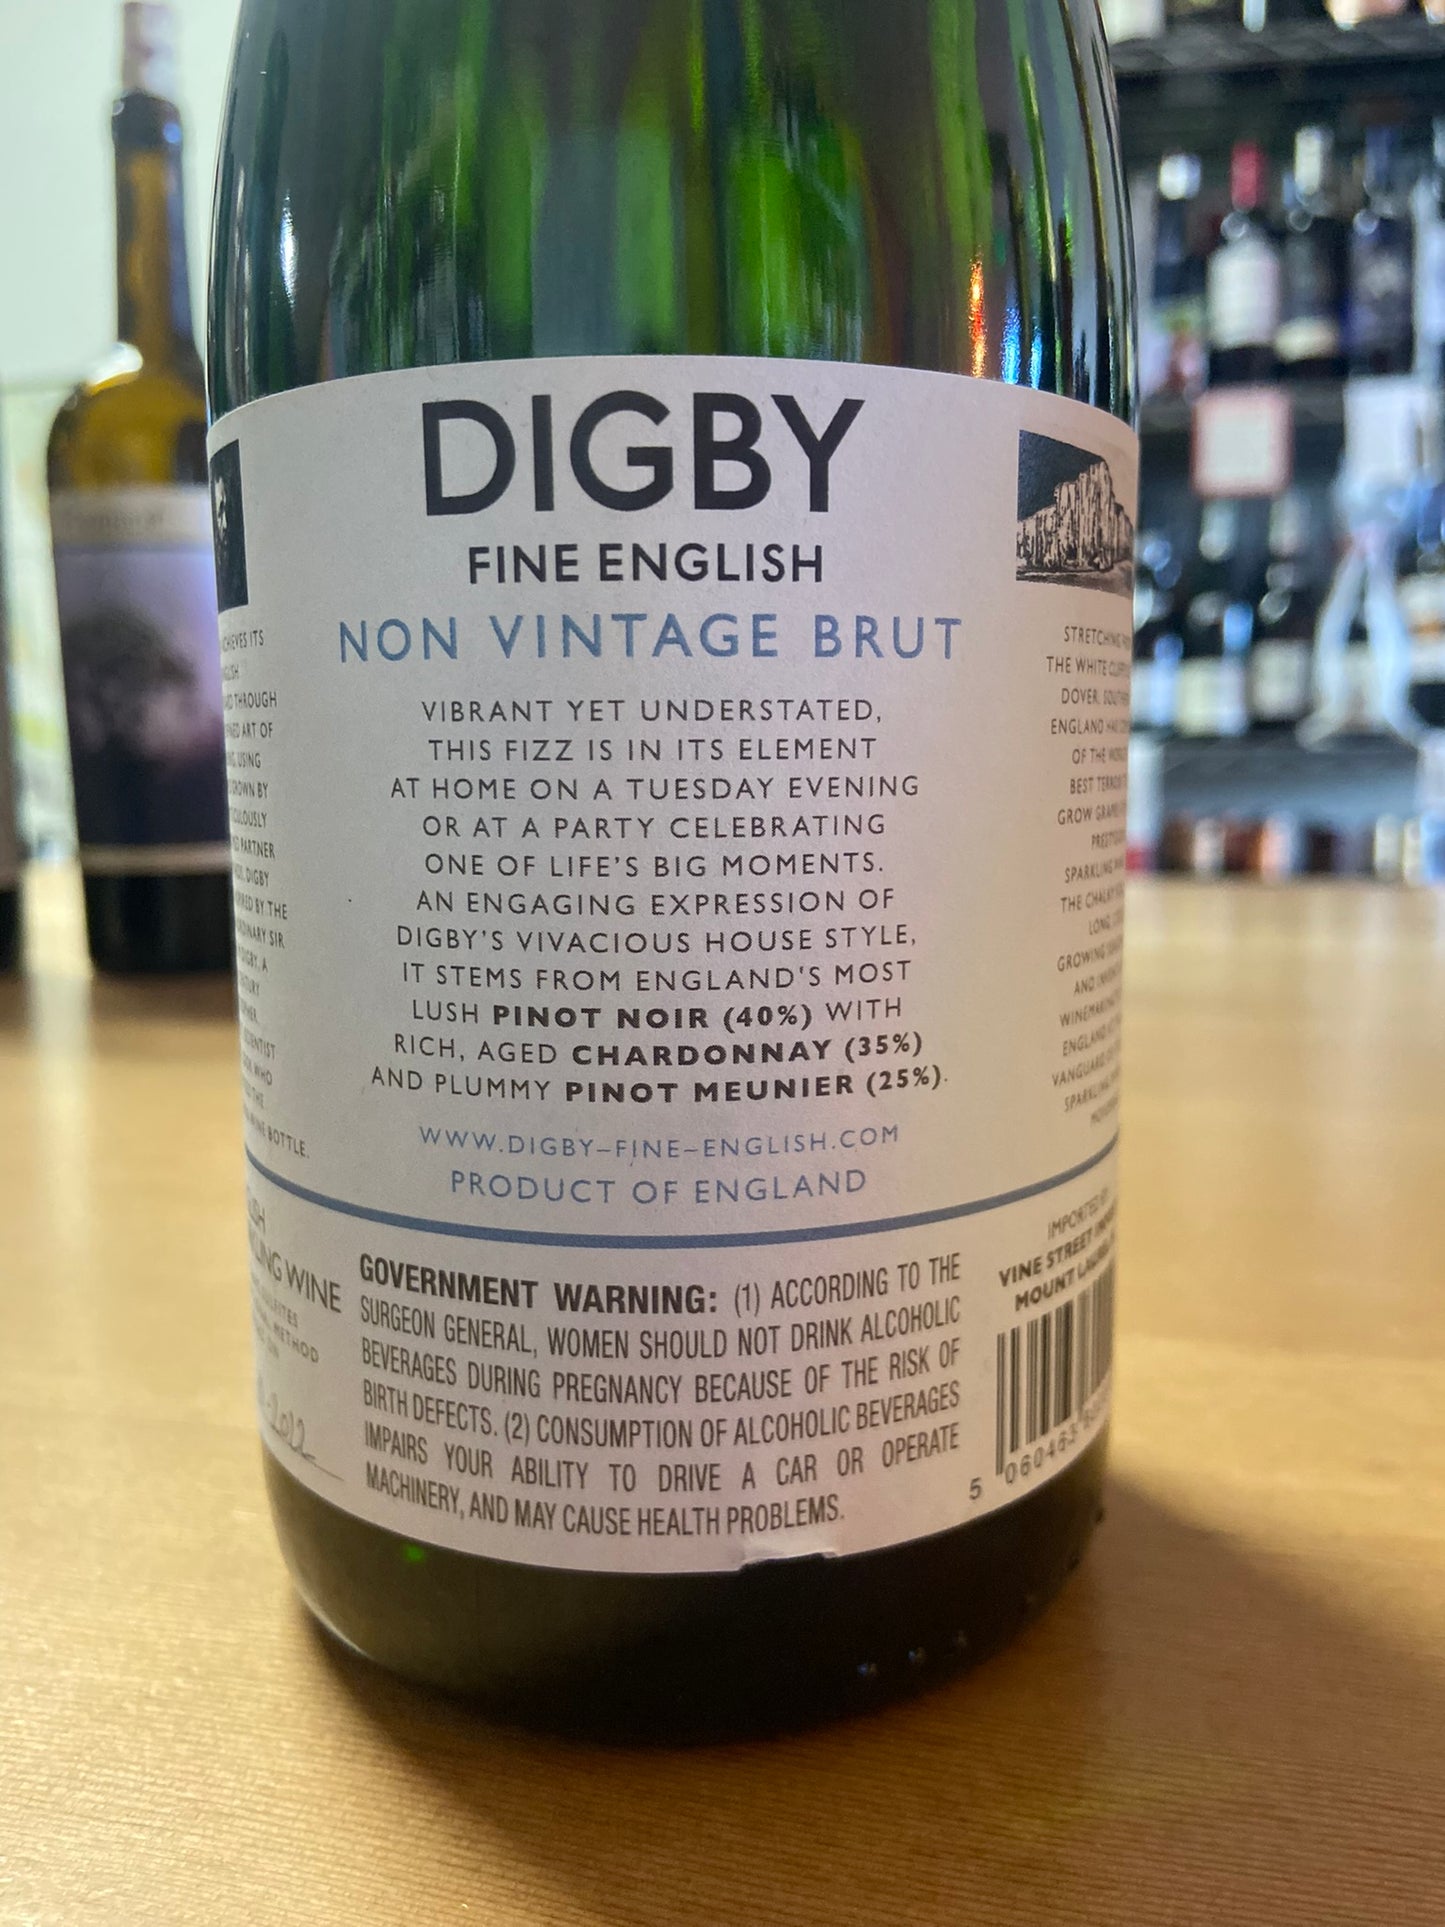 DIGBY FINE ENGLISH NV Brut Sparkling Wine (England)